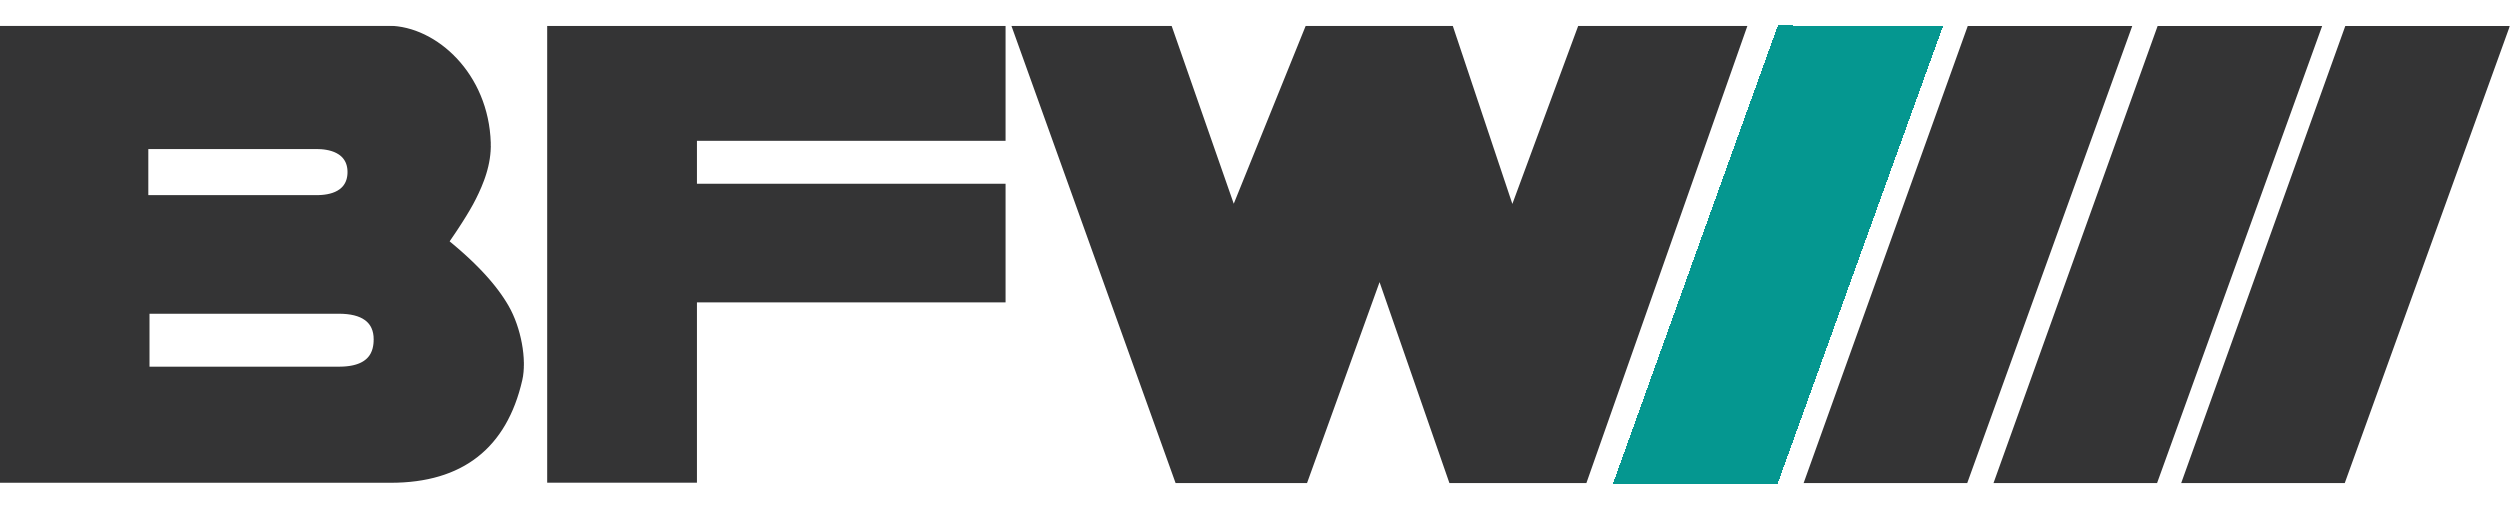 BFW Werner Völk GmbH